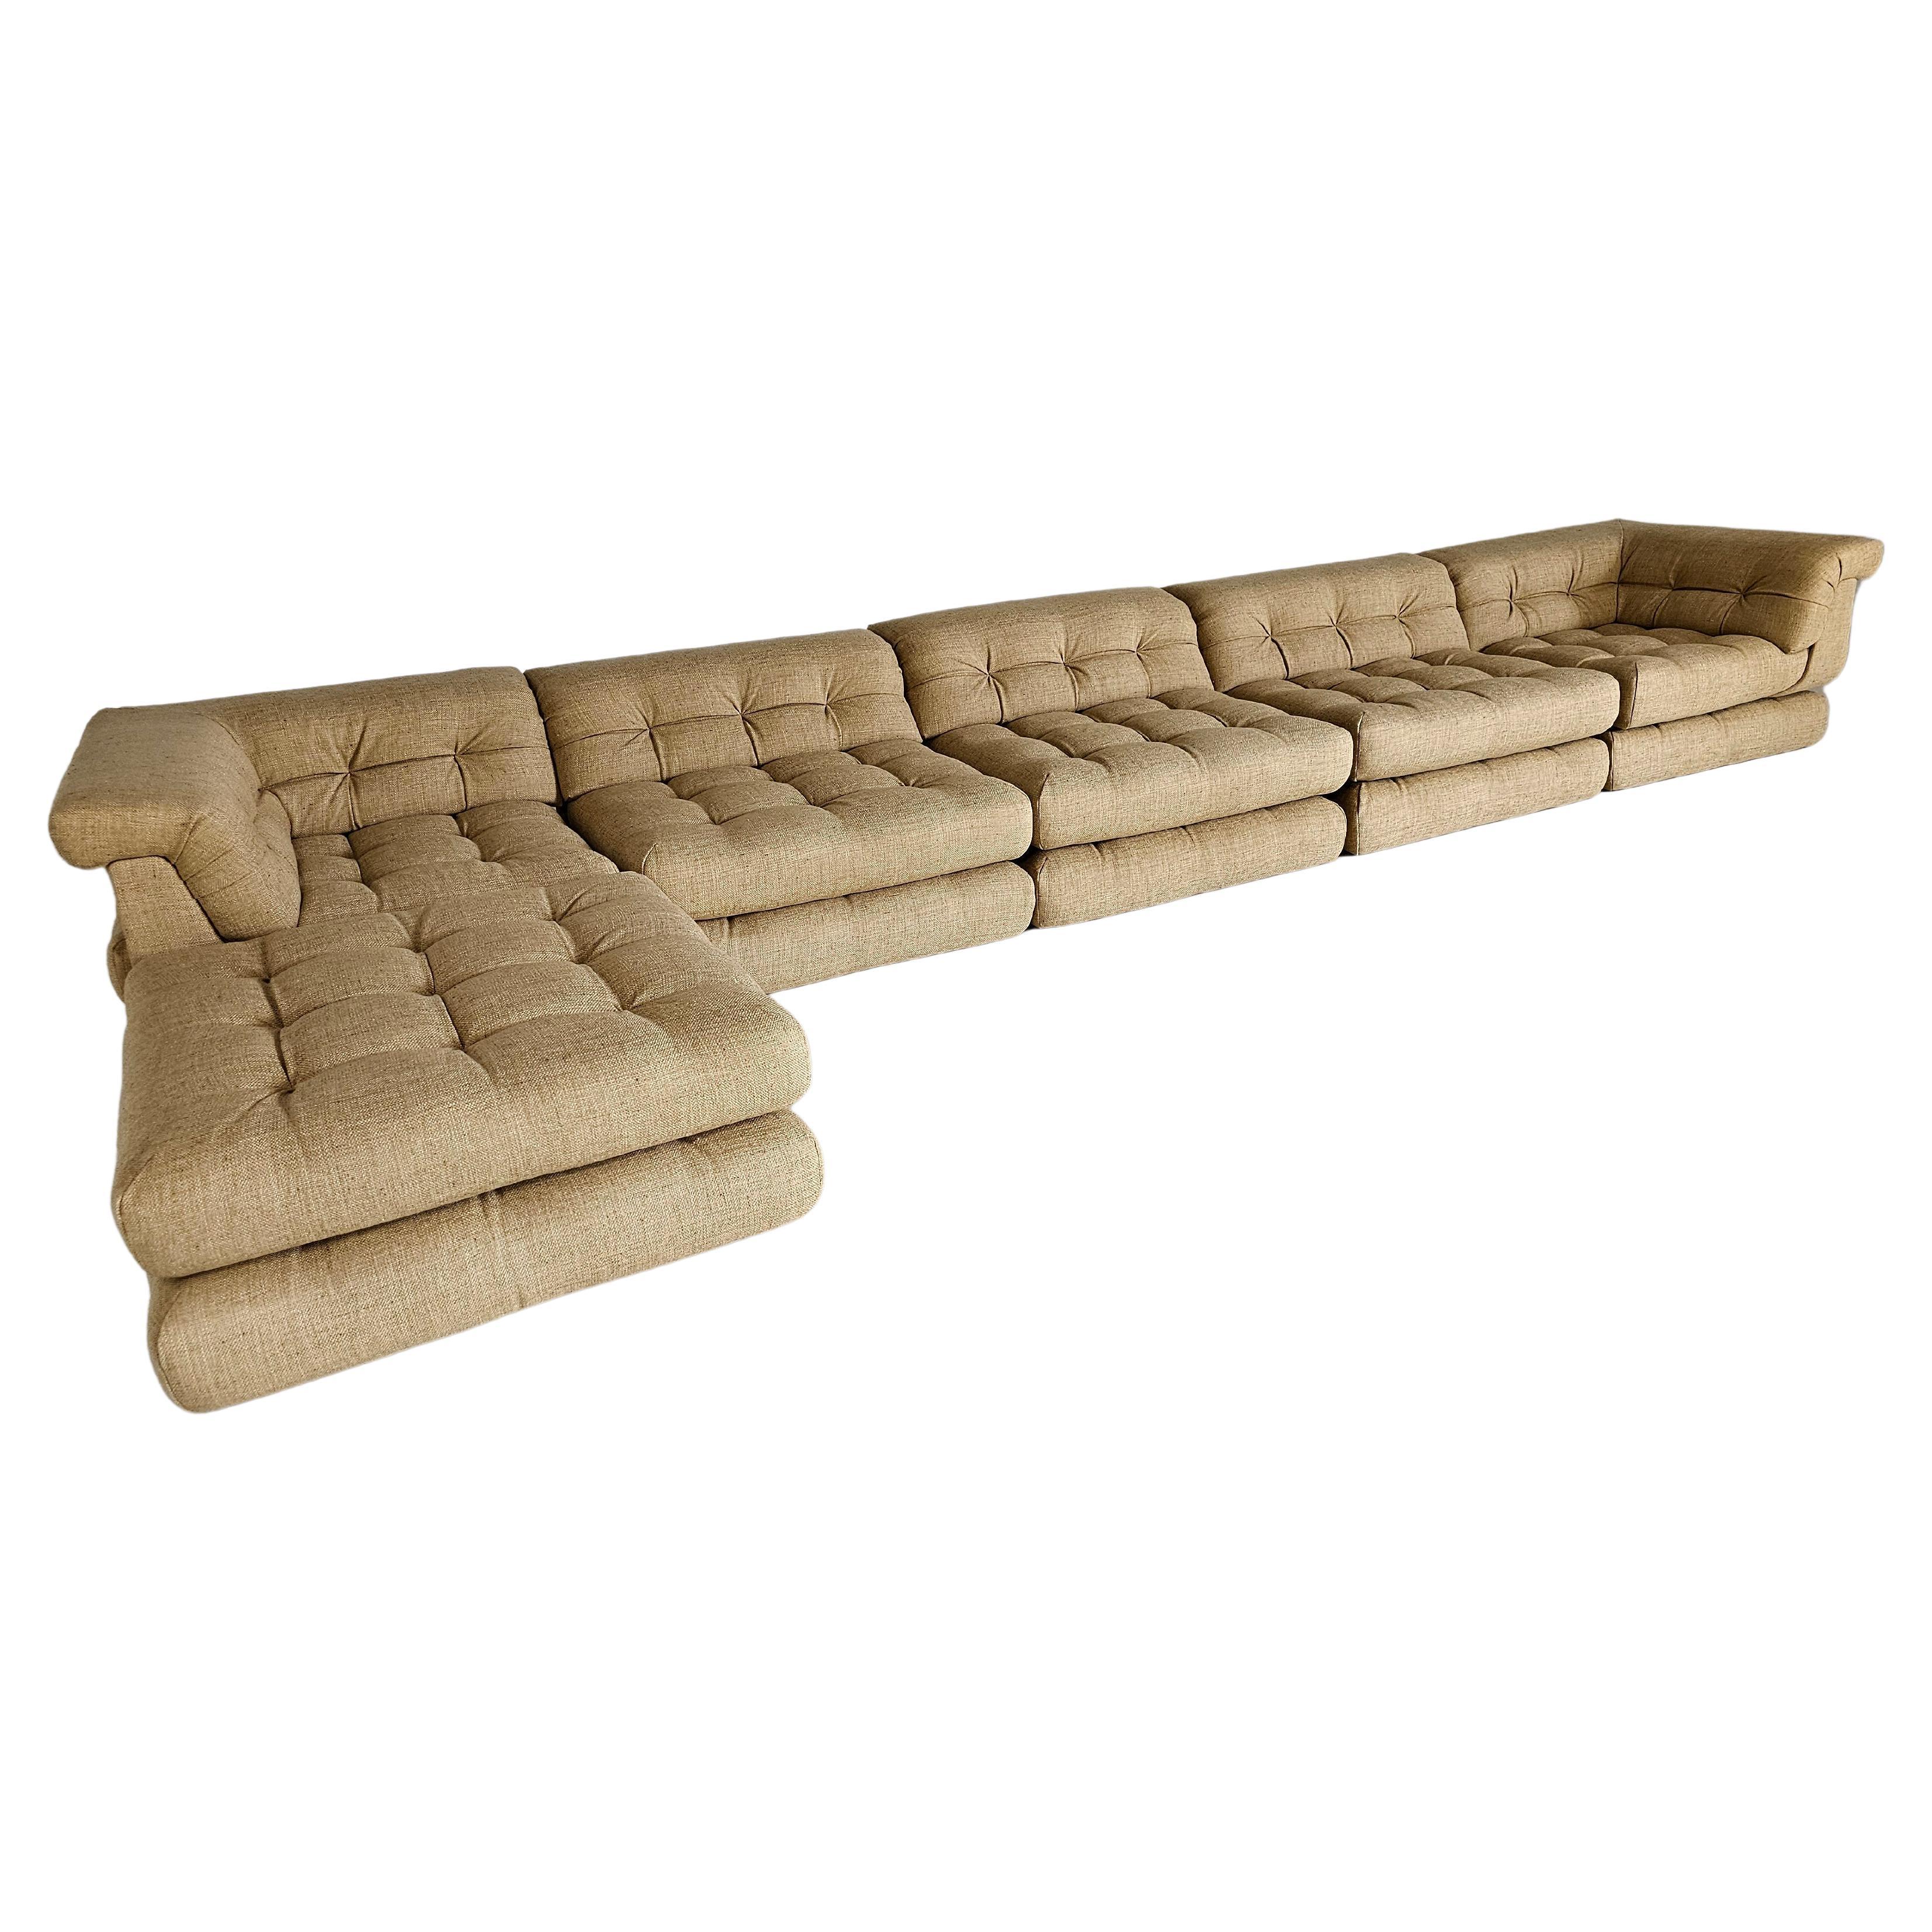 How is the Mah Jong sofa made?